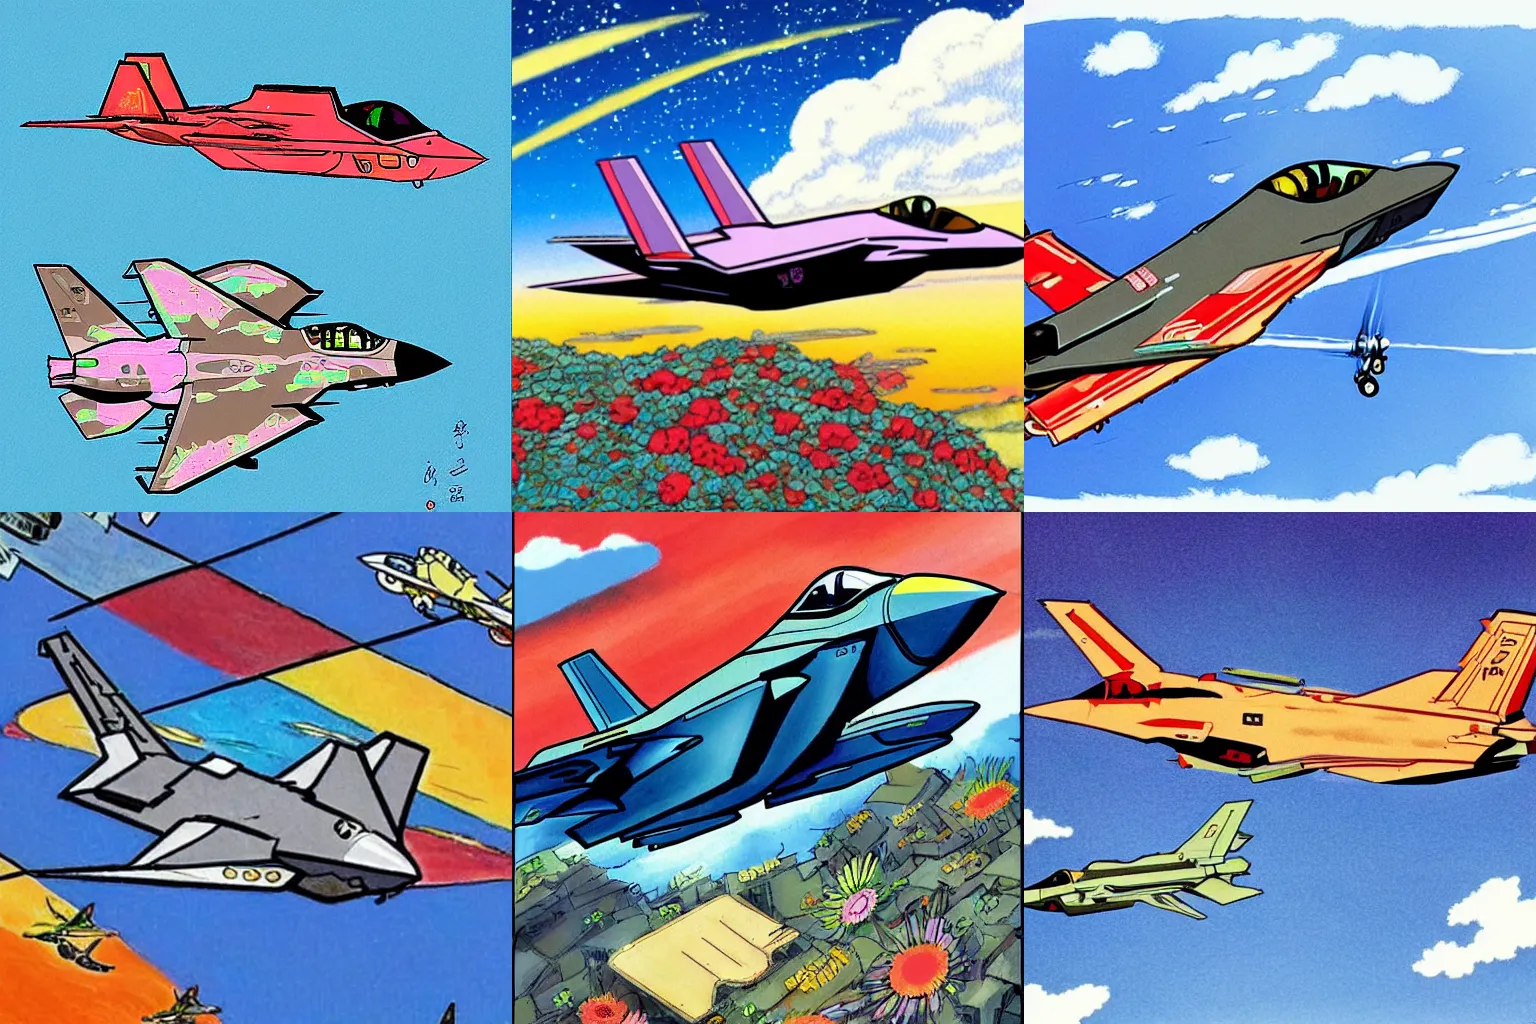 Prompt: An F-35 drawn by Studio Ghibli, cute, colorful, mesmerizing